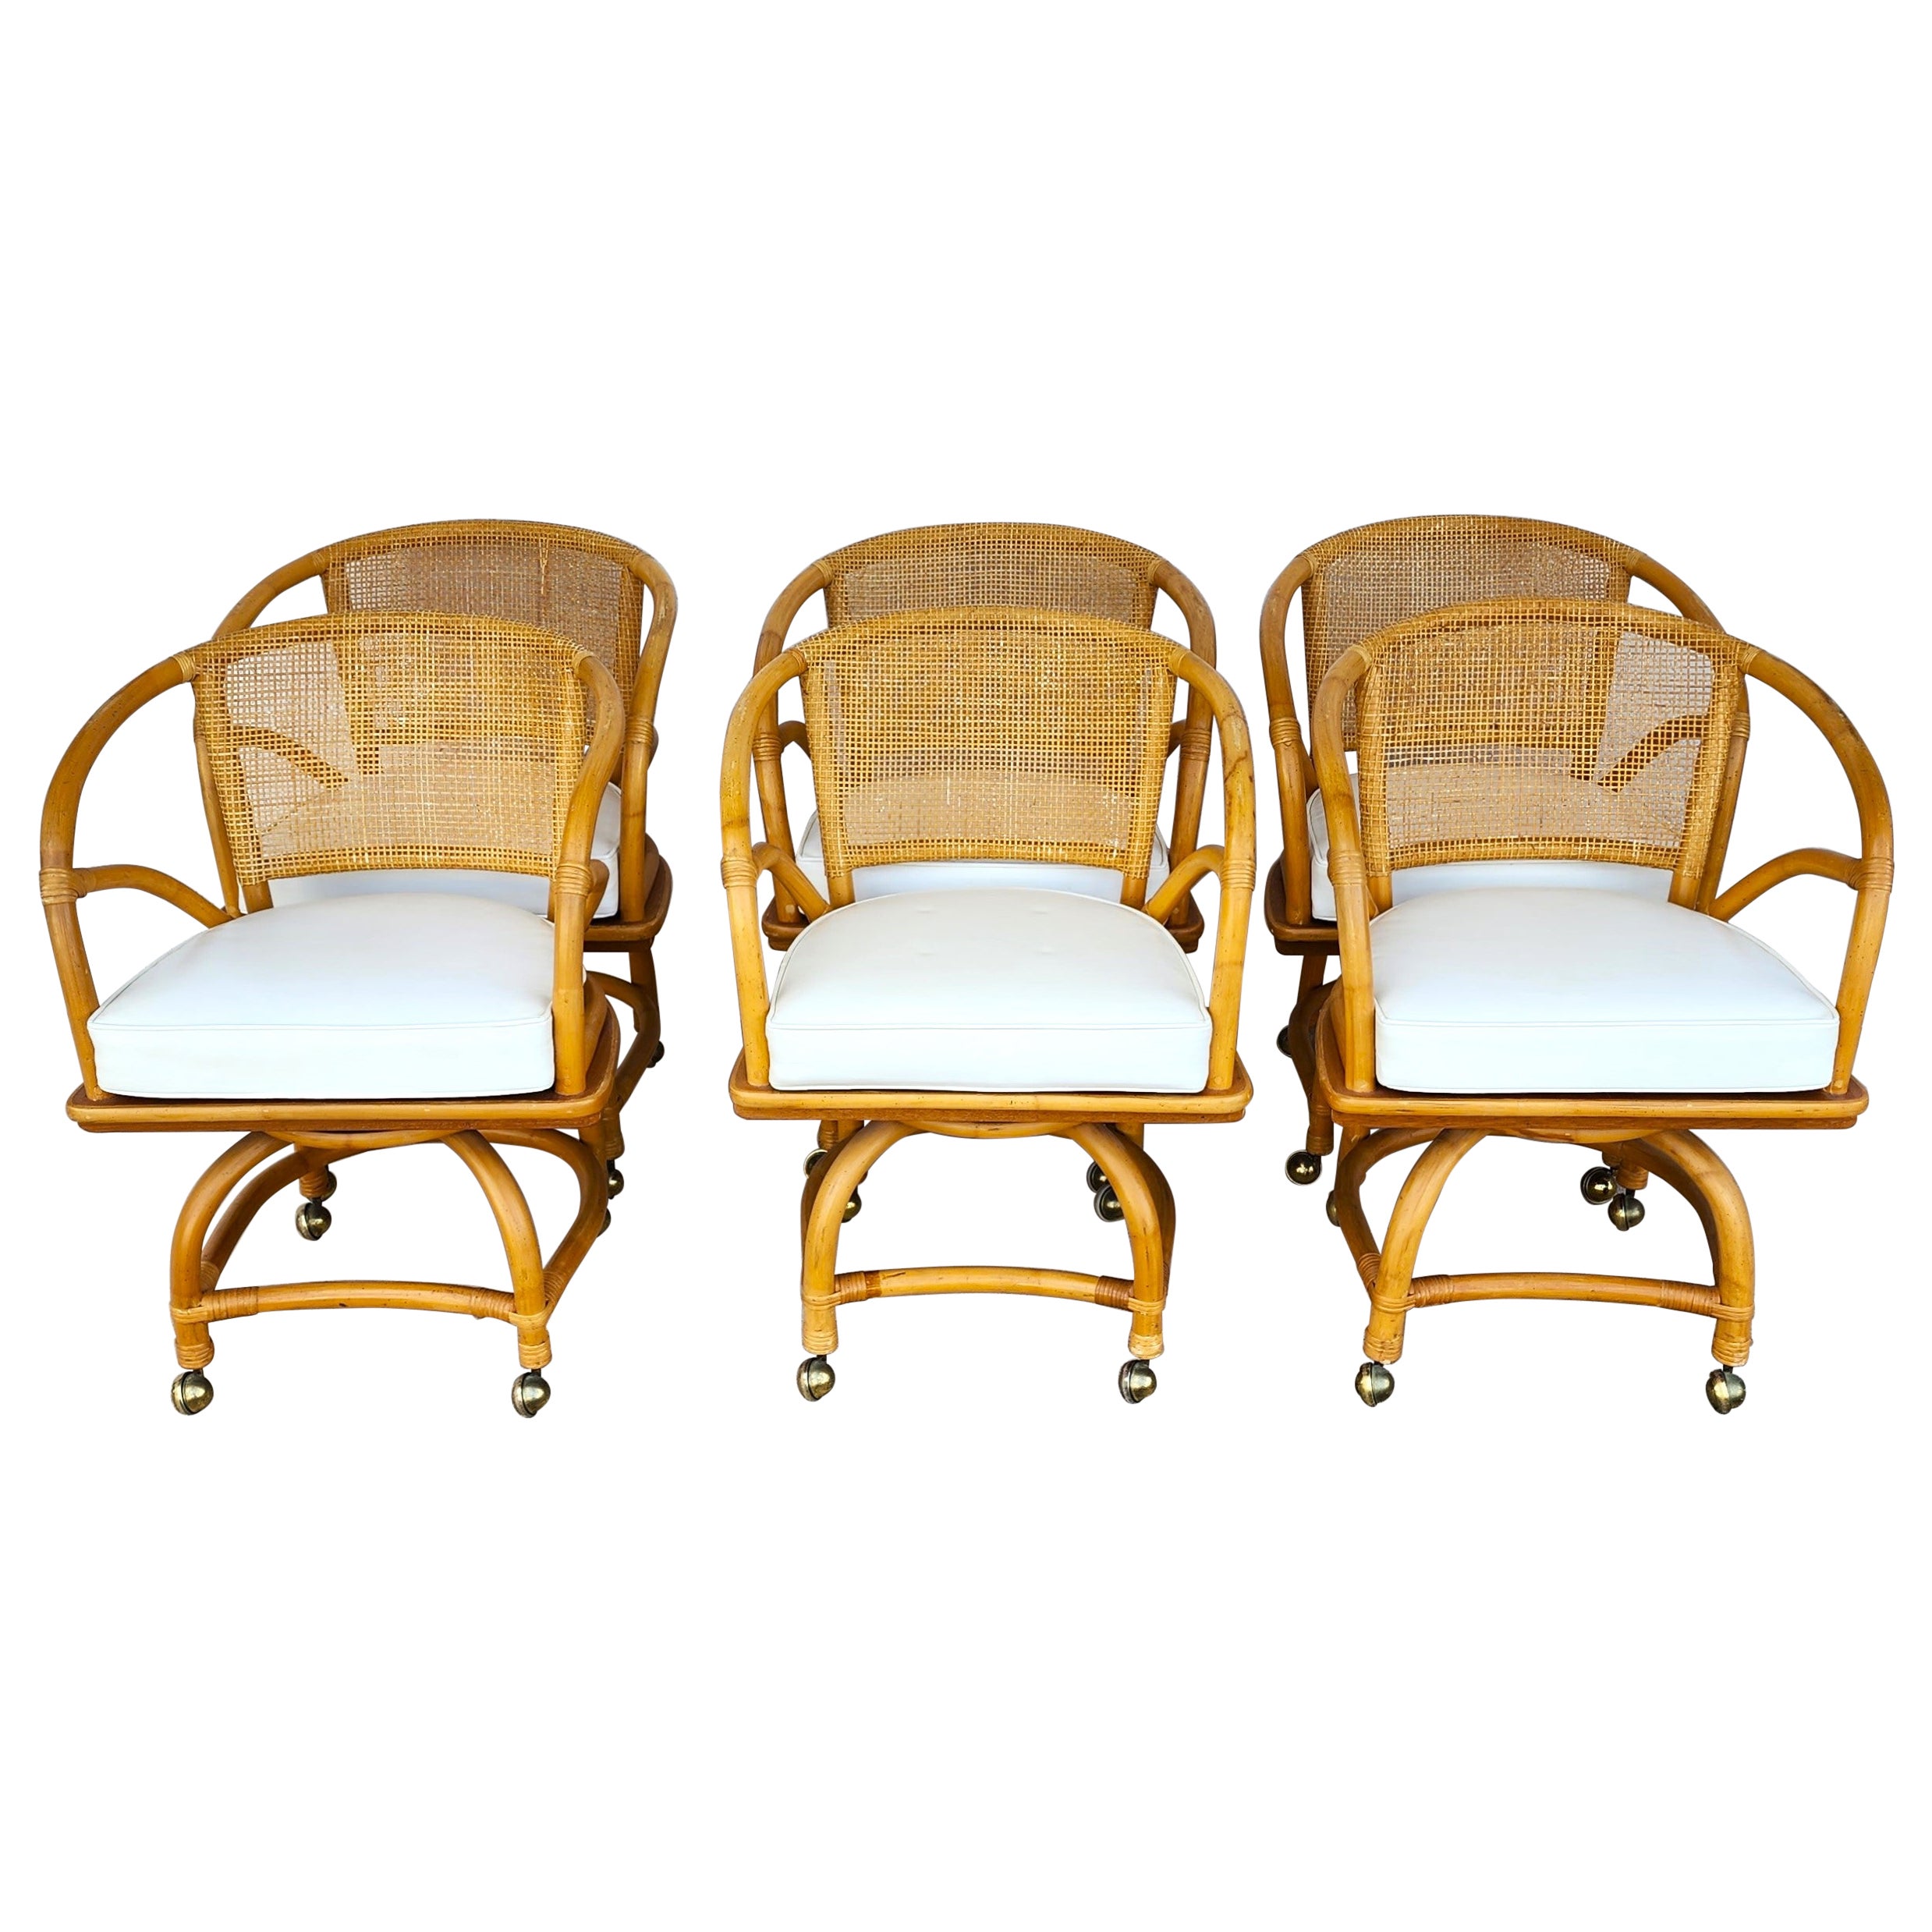 Esszimmerstühle aus Bambus, Vintage Rolling von Ficks Reed, 6er-Set, Vintage